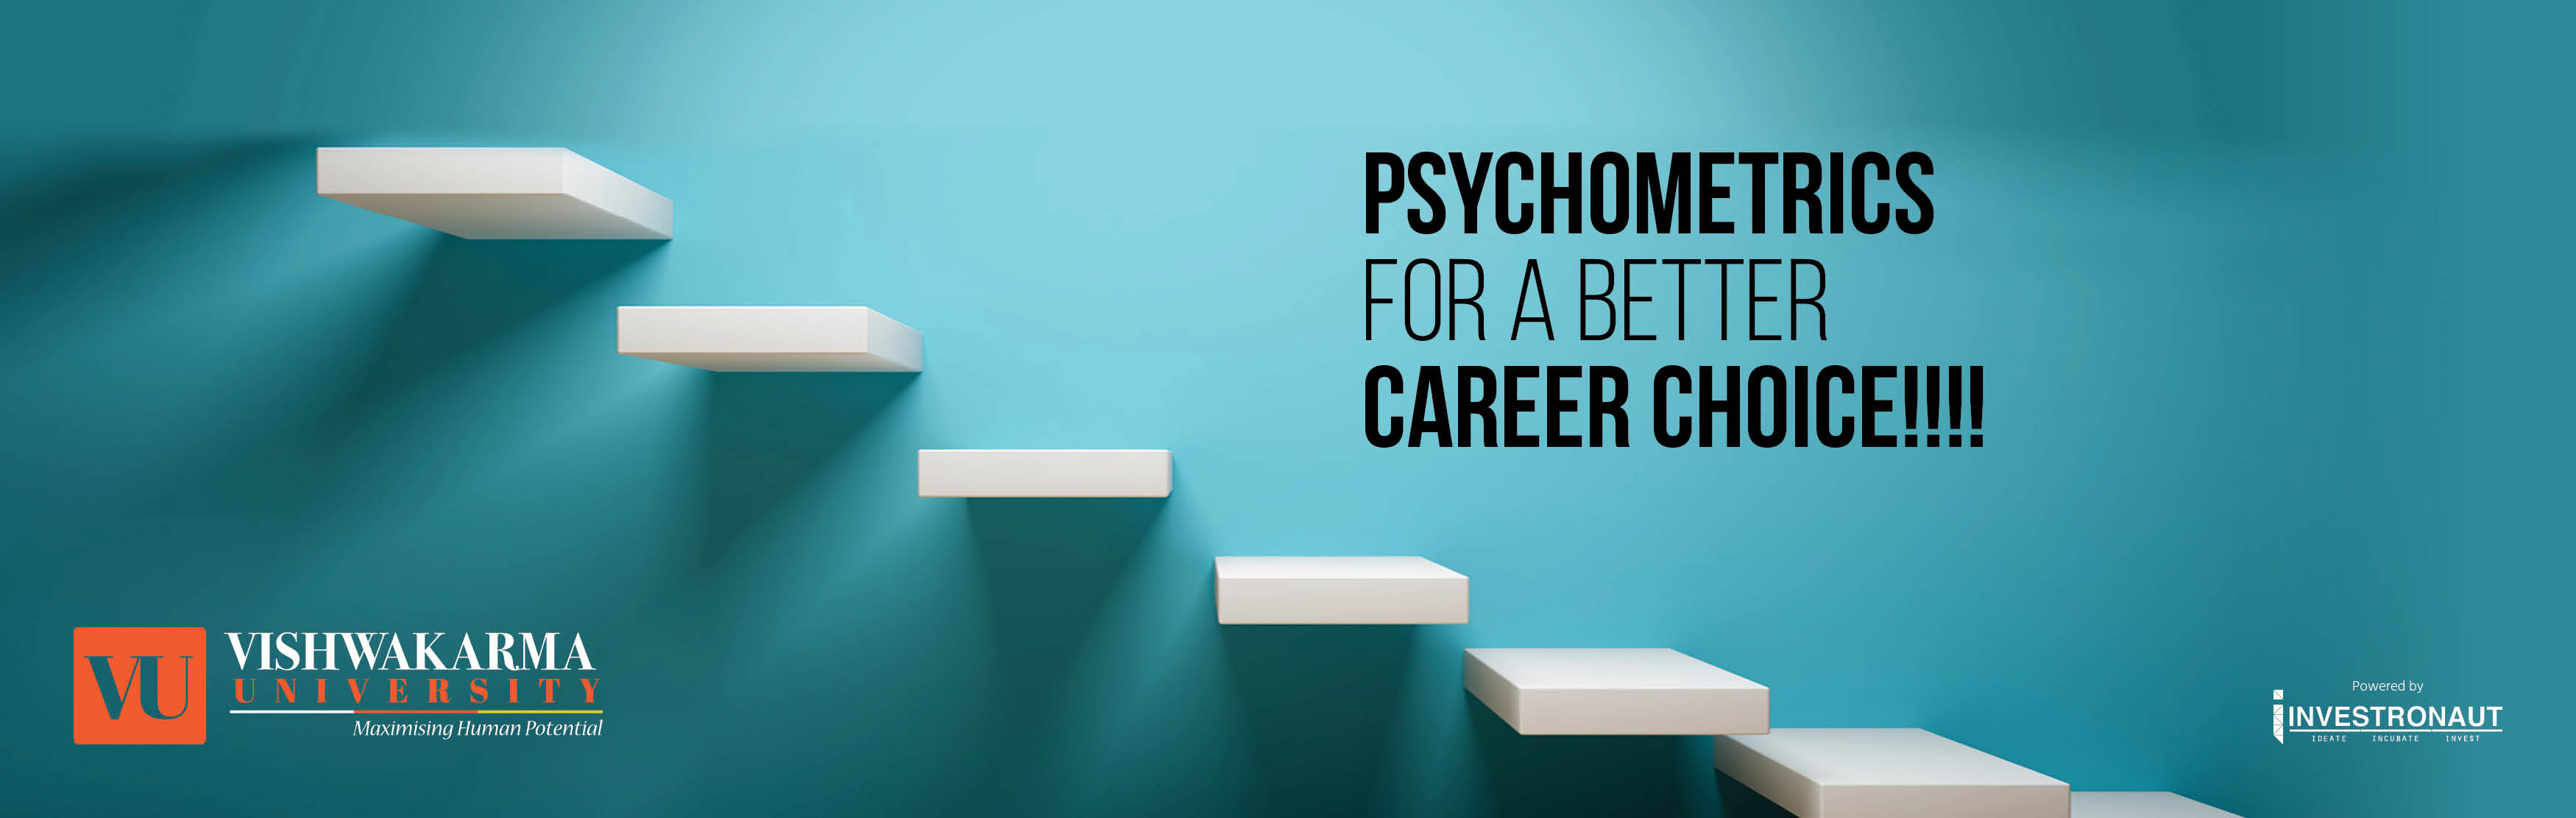 Psychometrics for a Better Career Choice